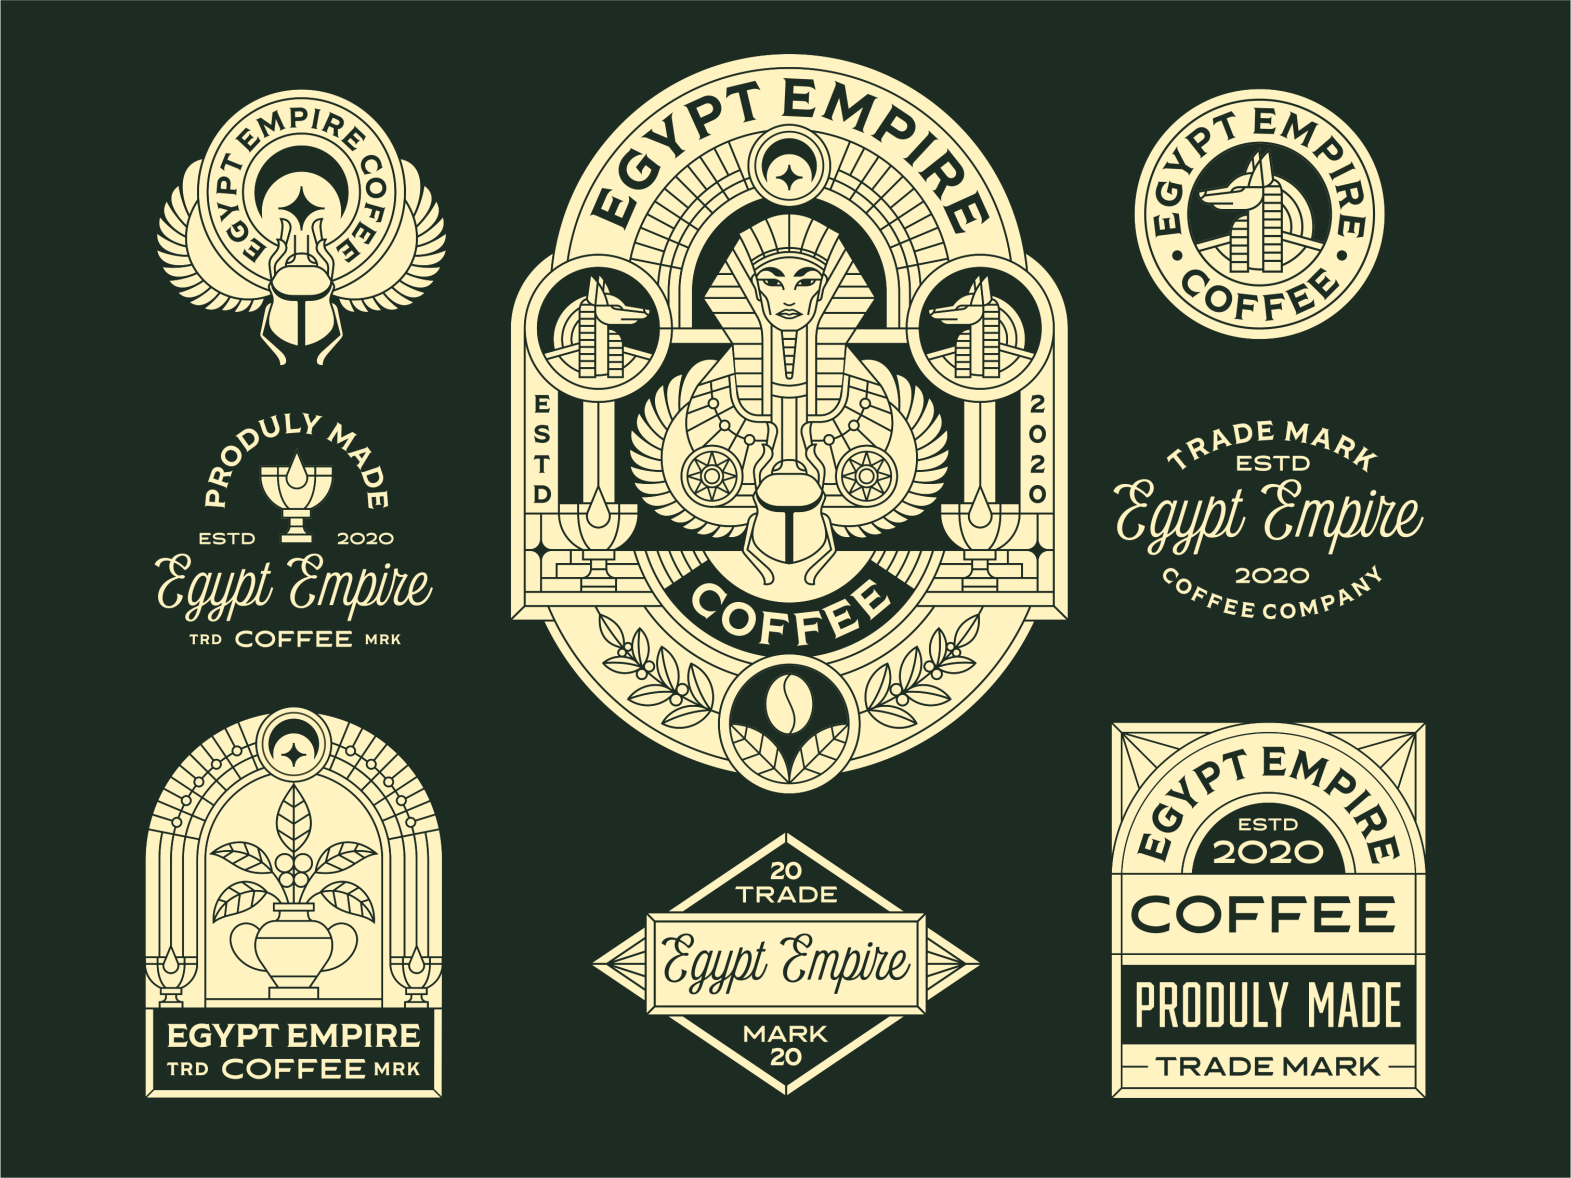 Egypt Empire Coffee by David Prasetya for Skilline Design Co. on Dribbble